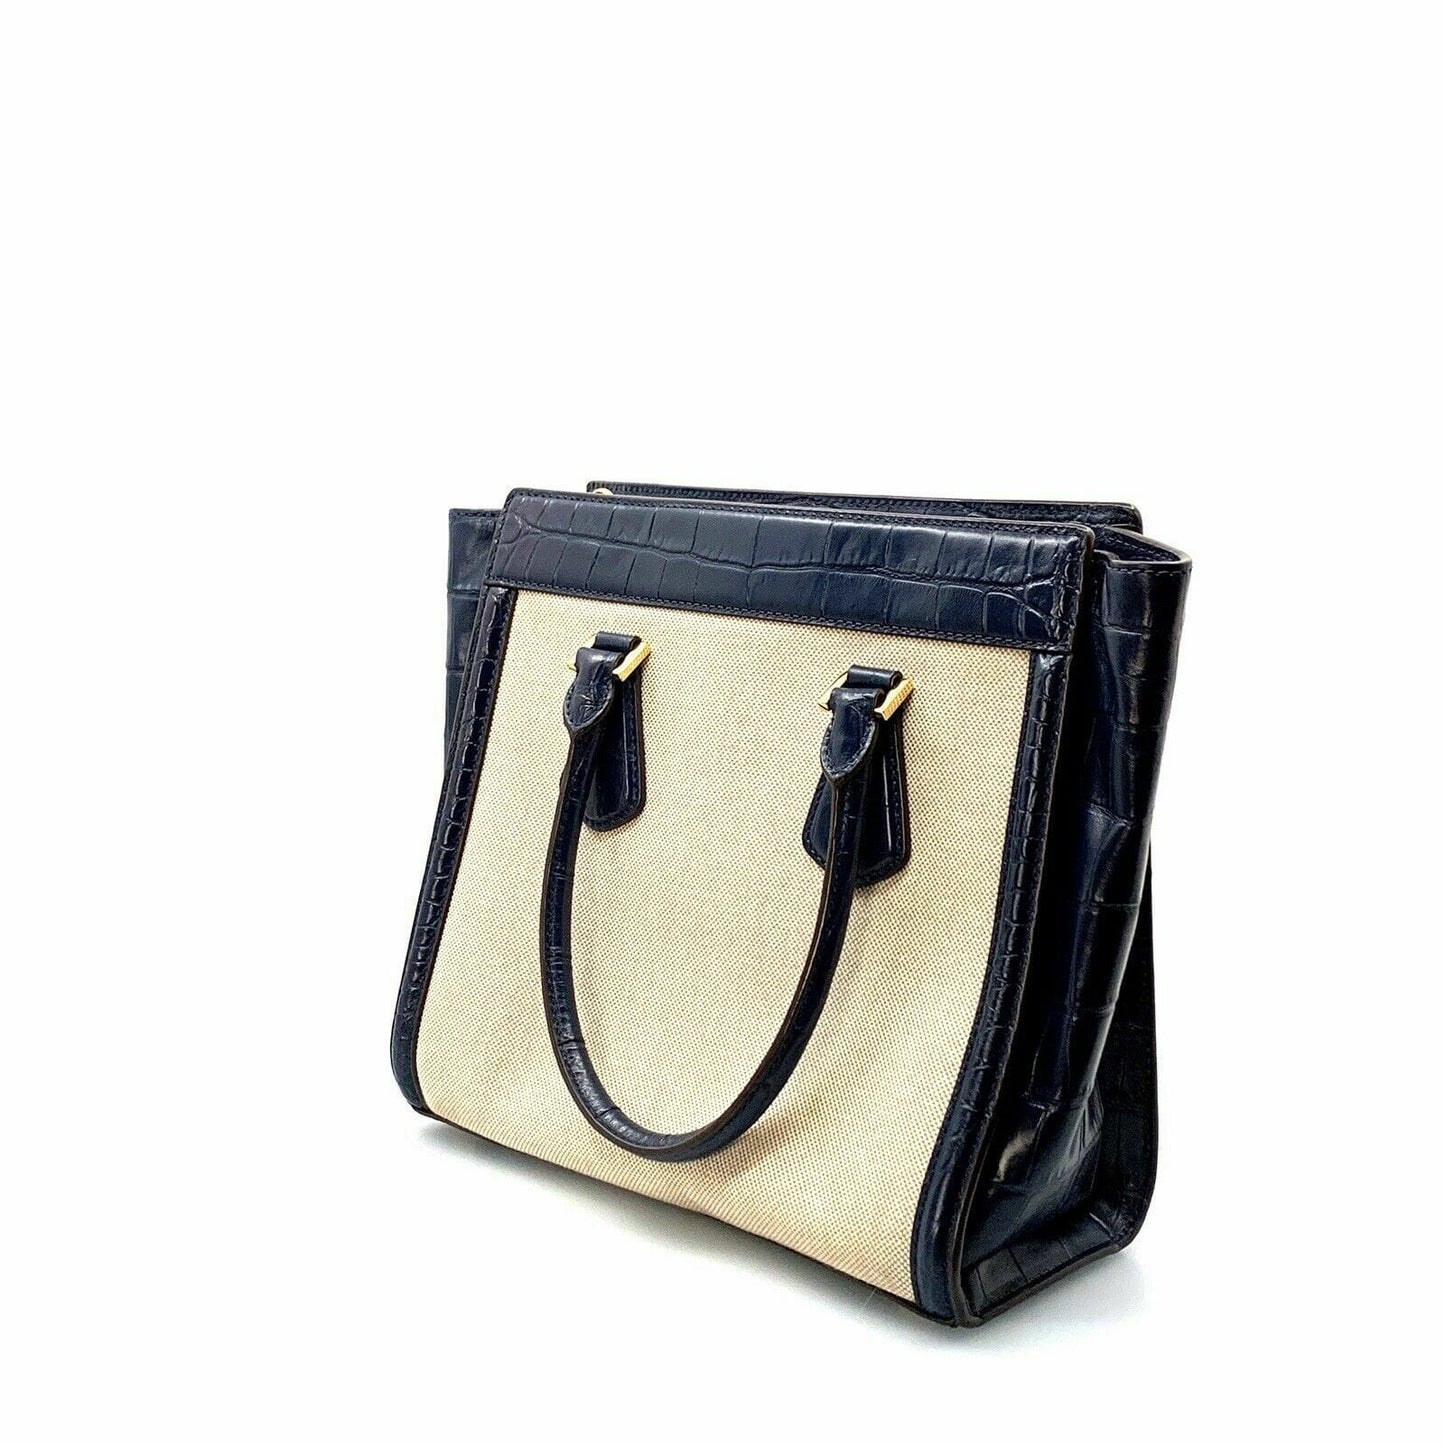 Michael Kors Colette Leather Canvas Navy Cream Tote Bag Crossbody Purse Charm